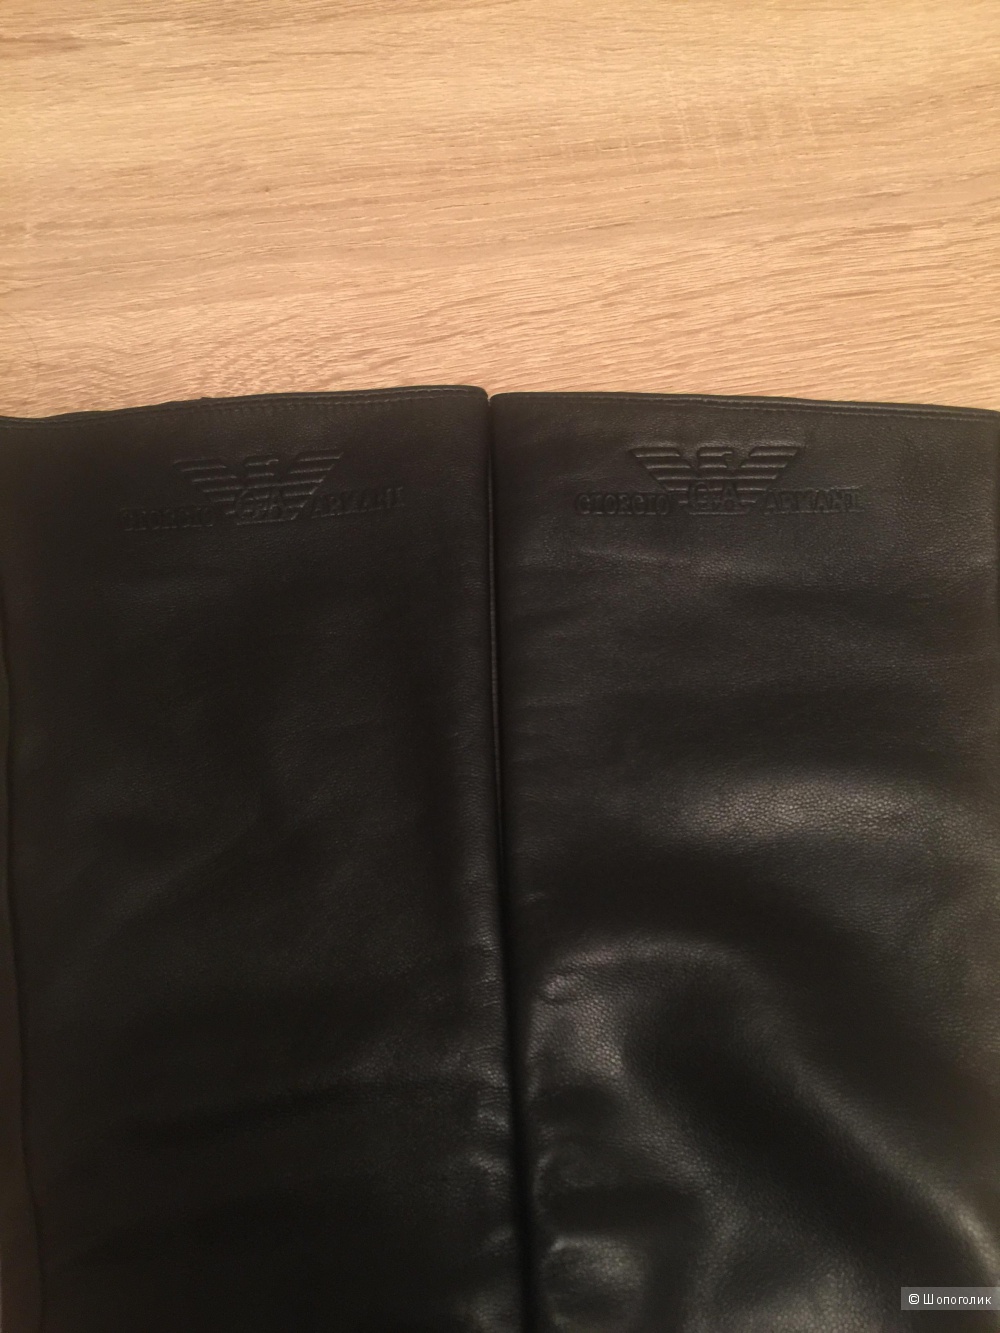 Перчатки кожаные Giorgio Armani размер 7-7.5